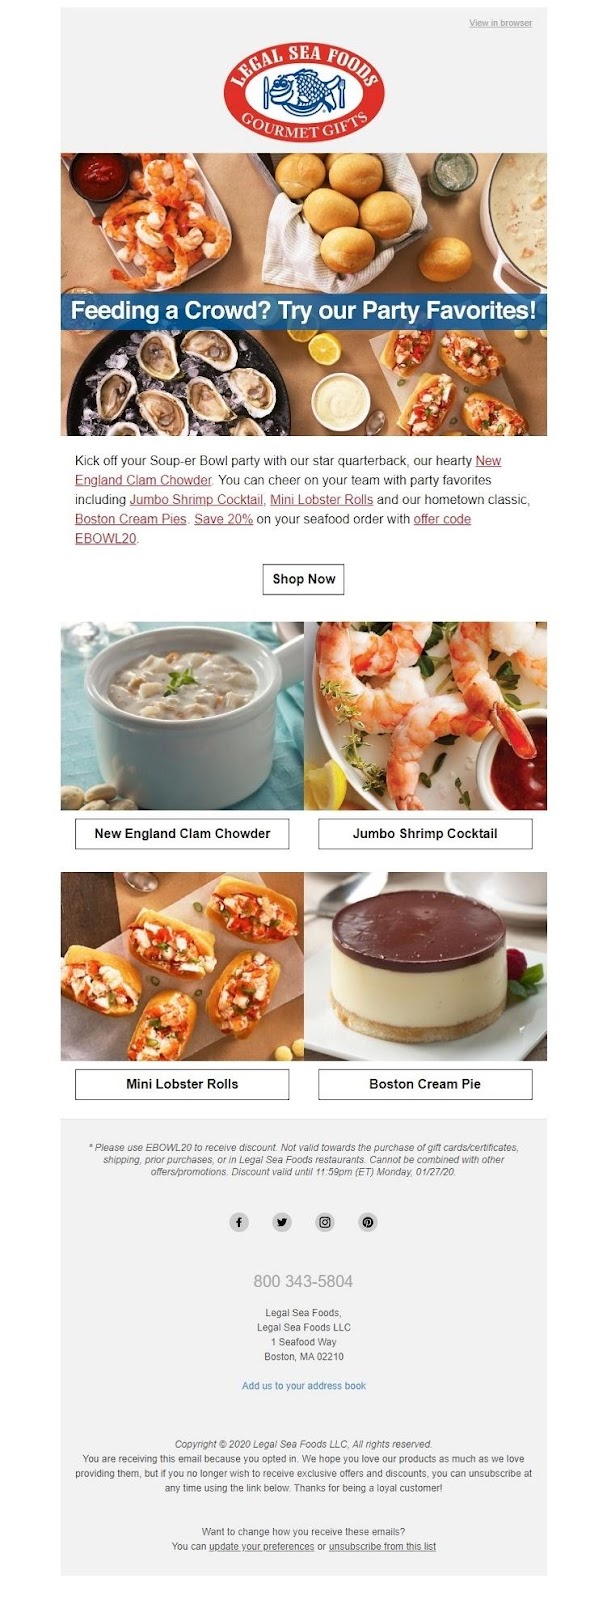 Legal Sea Foods newsletter